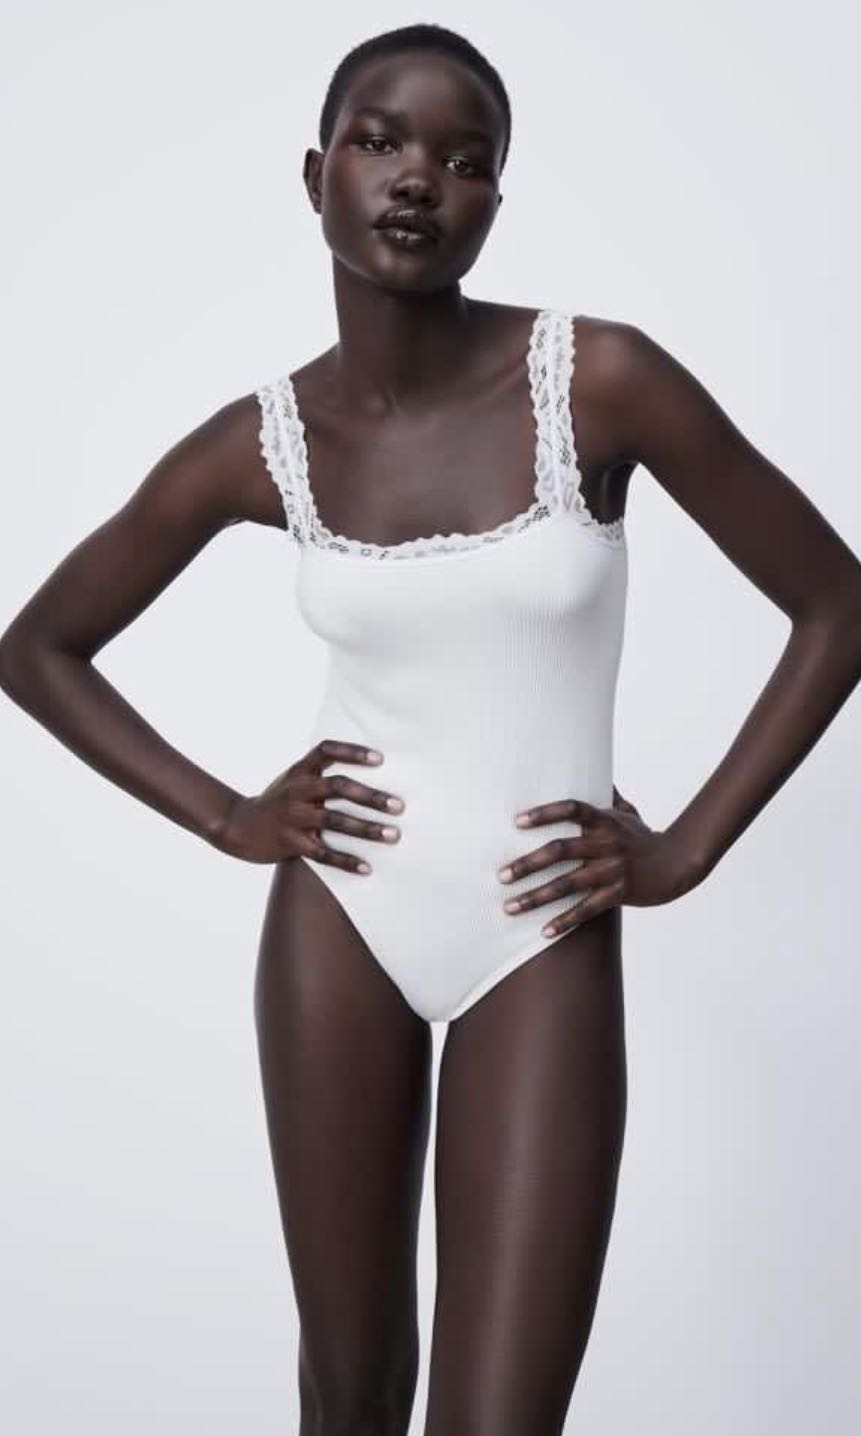 https://media.karousell.com/media/photos/products/2021/11/4/zara_white_lace_bodysuit_1636002101_2ccc4154.jpg